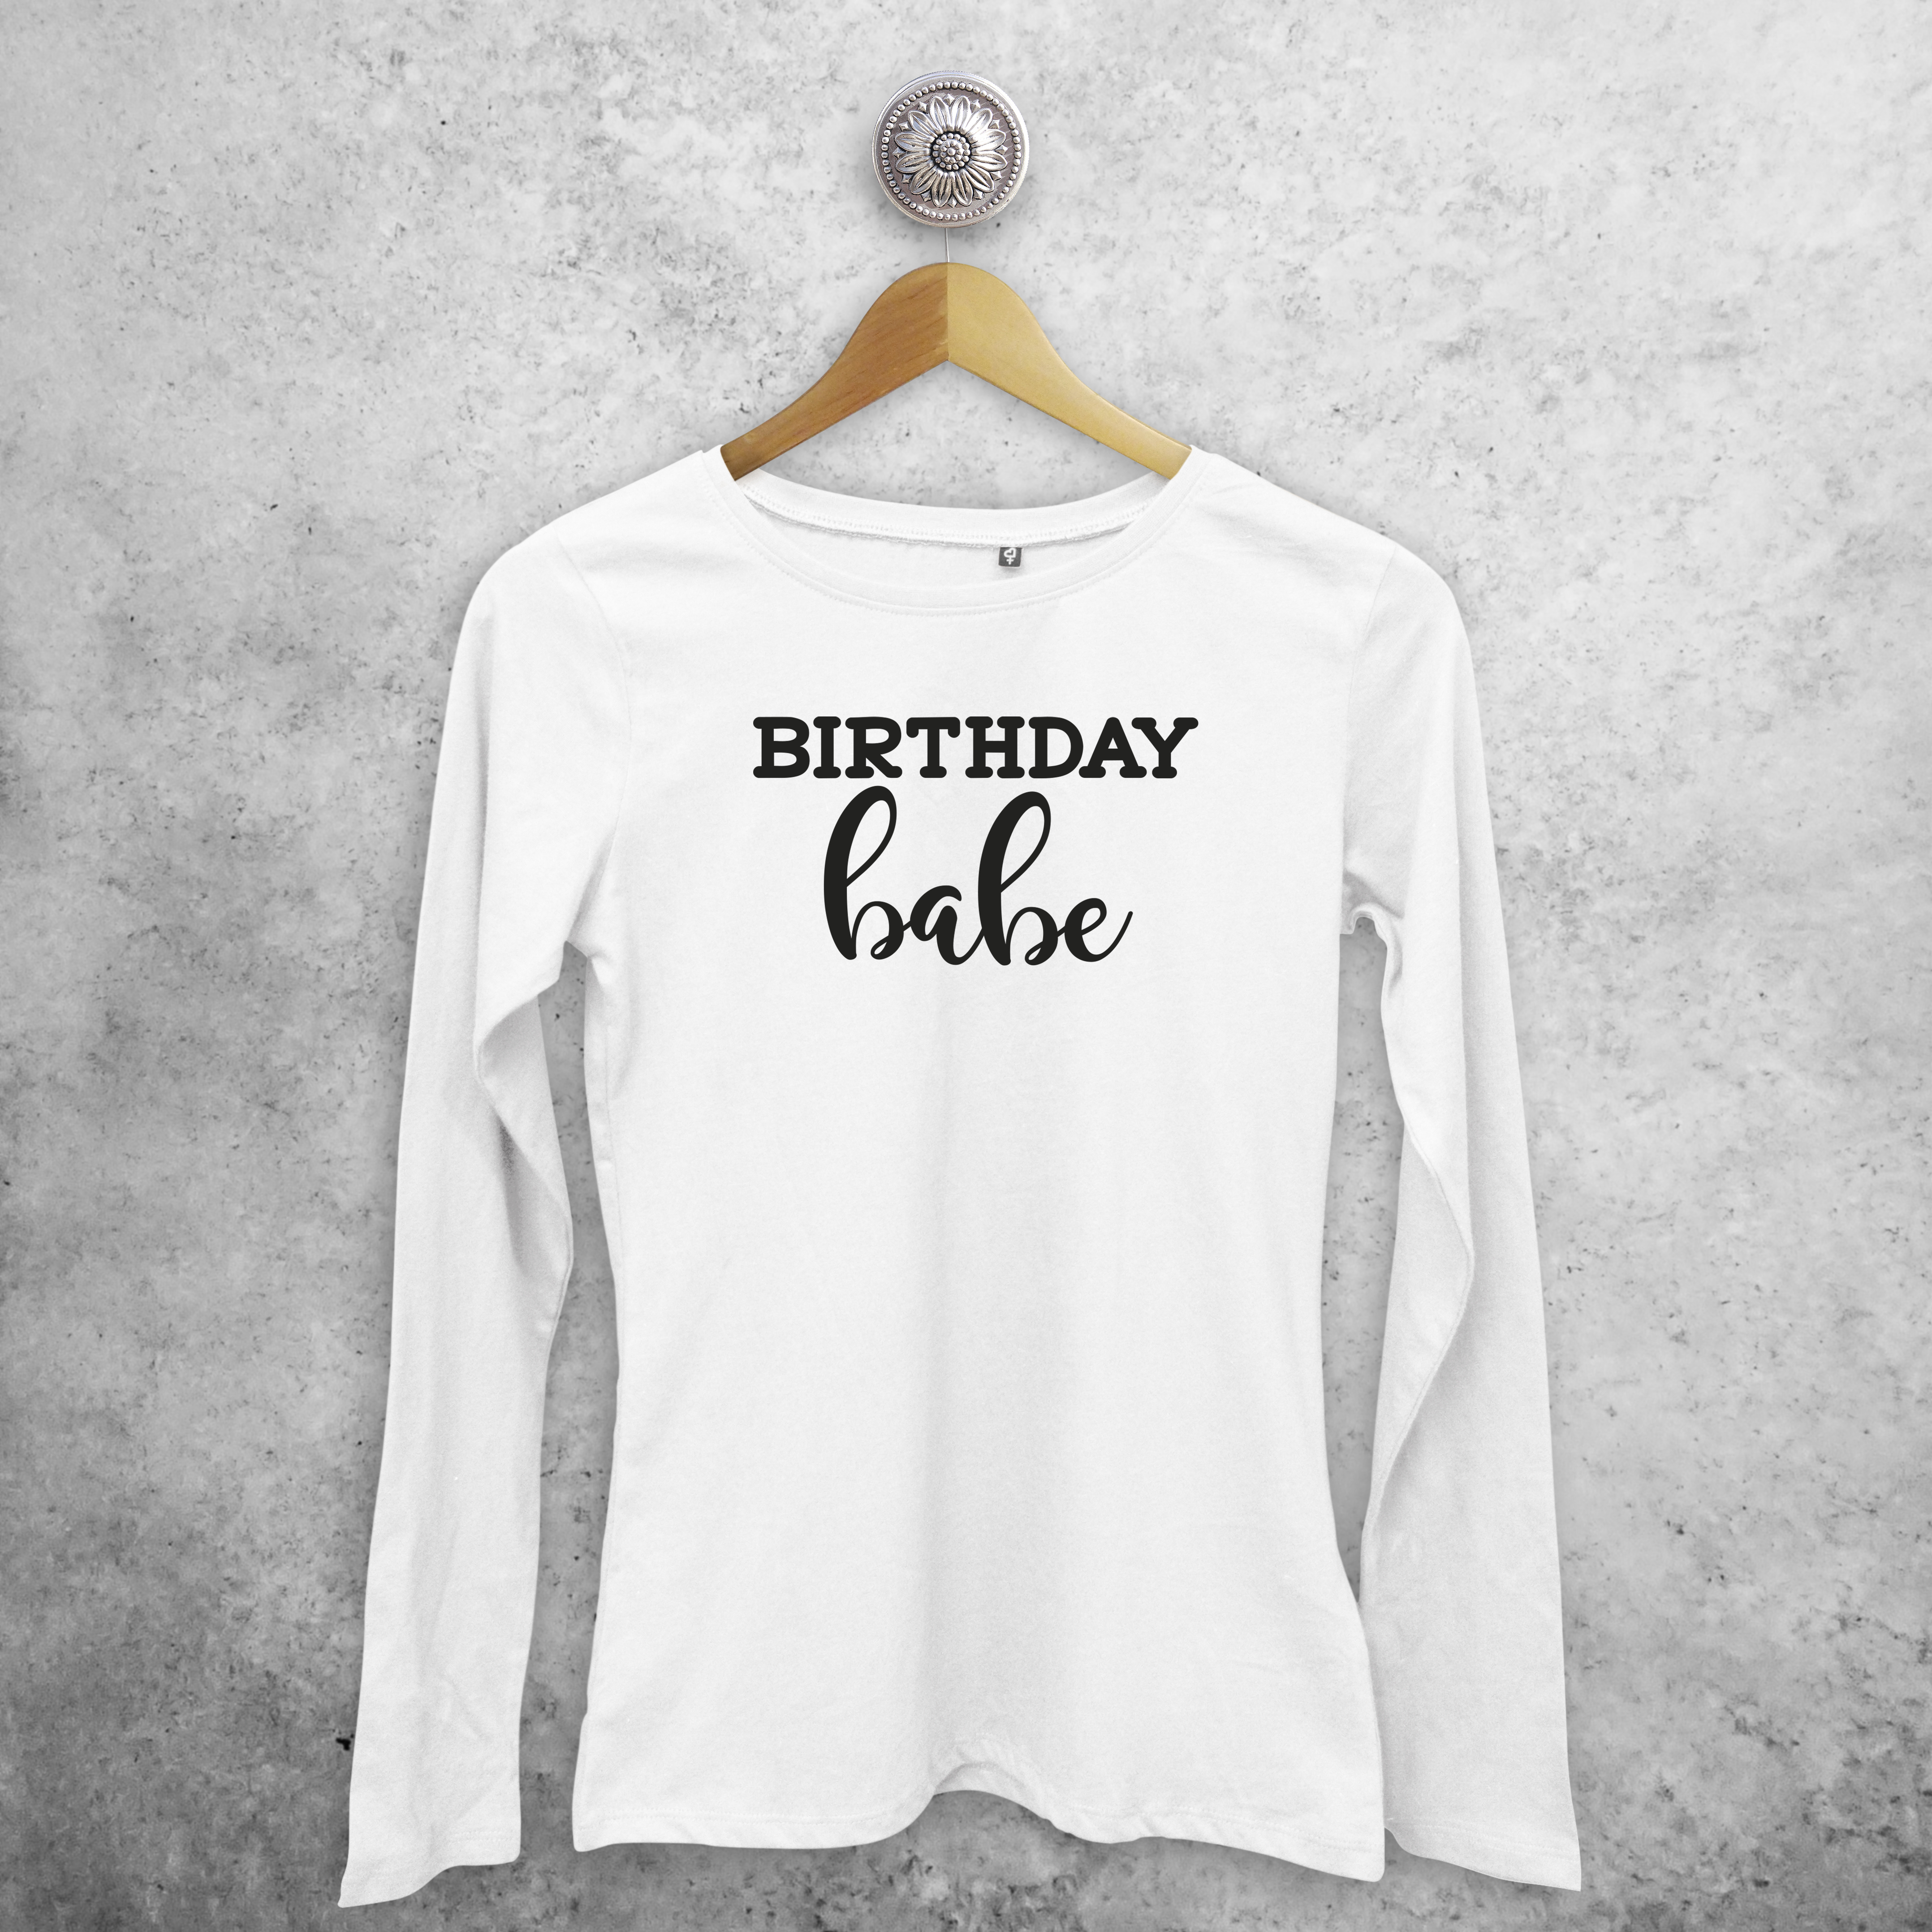 'Birthday babe' adult longsleeve shirt